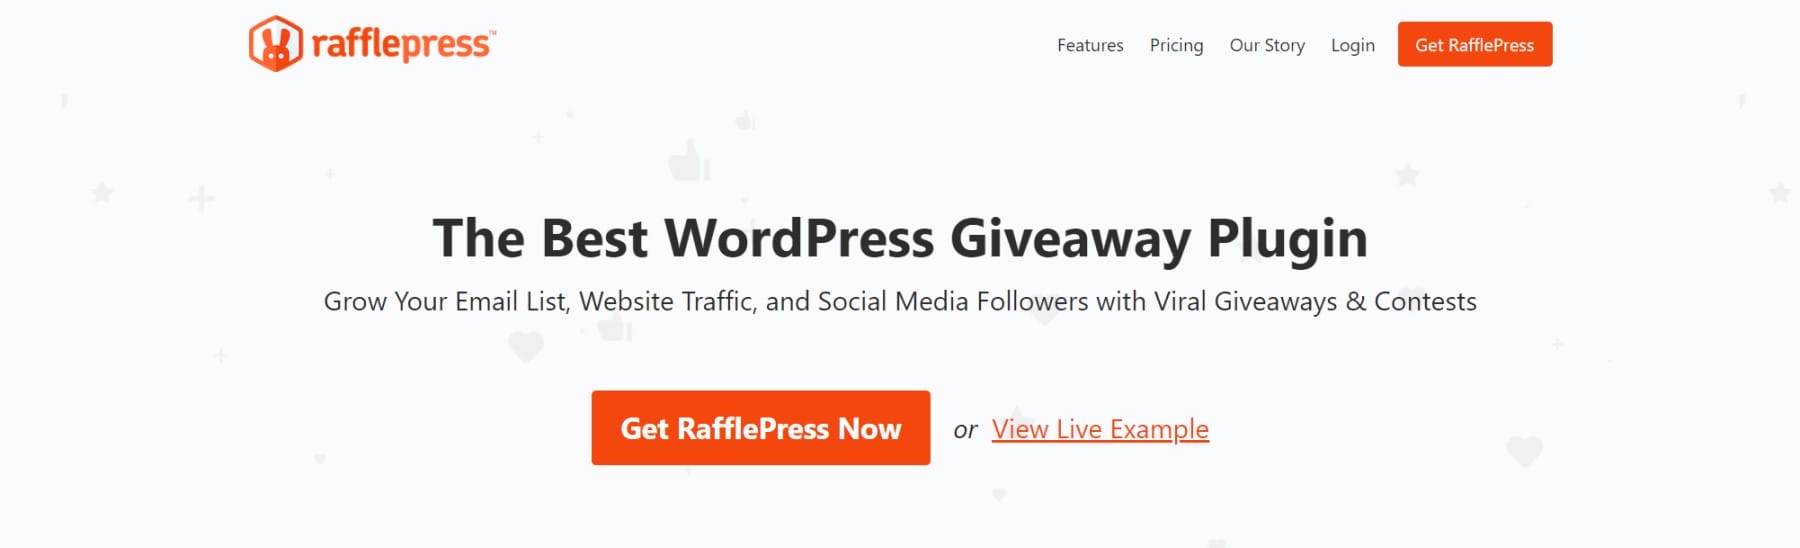 RafflePress WordPress Giveaway Marketing Plugin